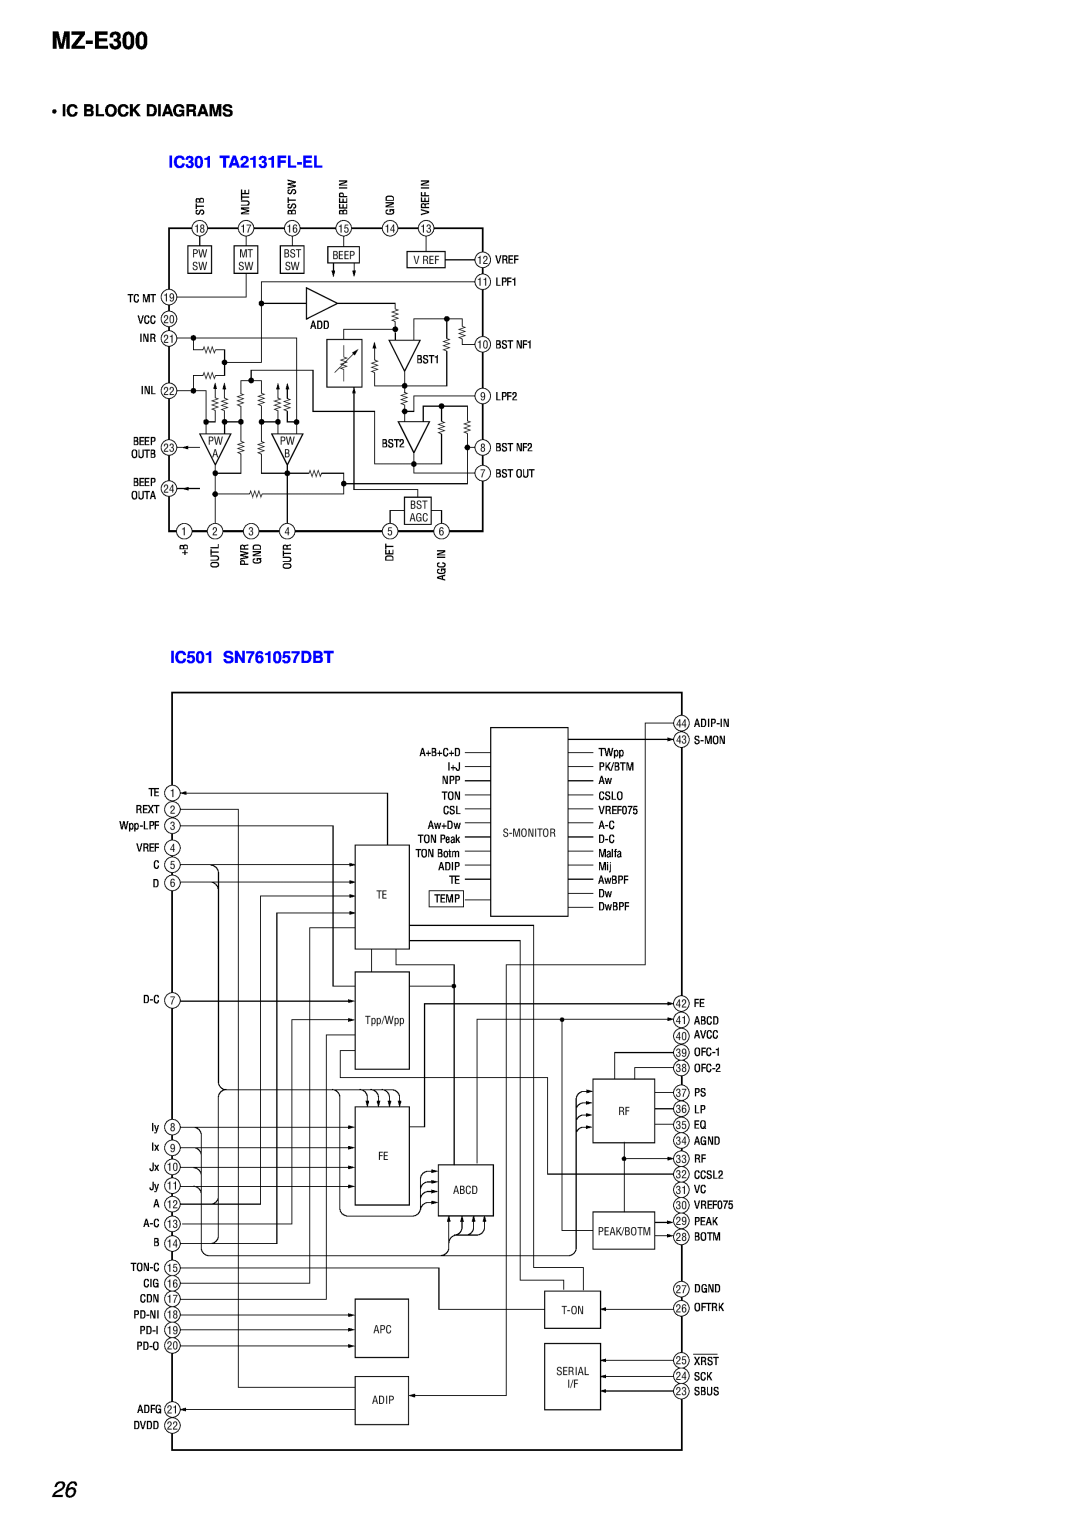 Sony MZ-300 specifications Ic Block Diagrams, IC301 TA2131FL-EL, IC501 SN761057DBT, MZ-E300 